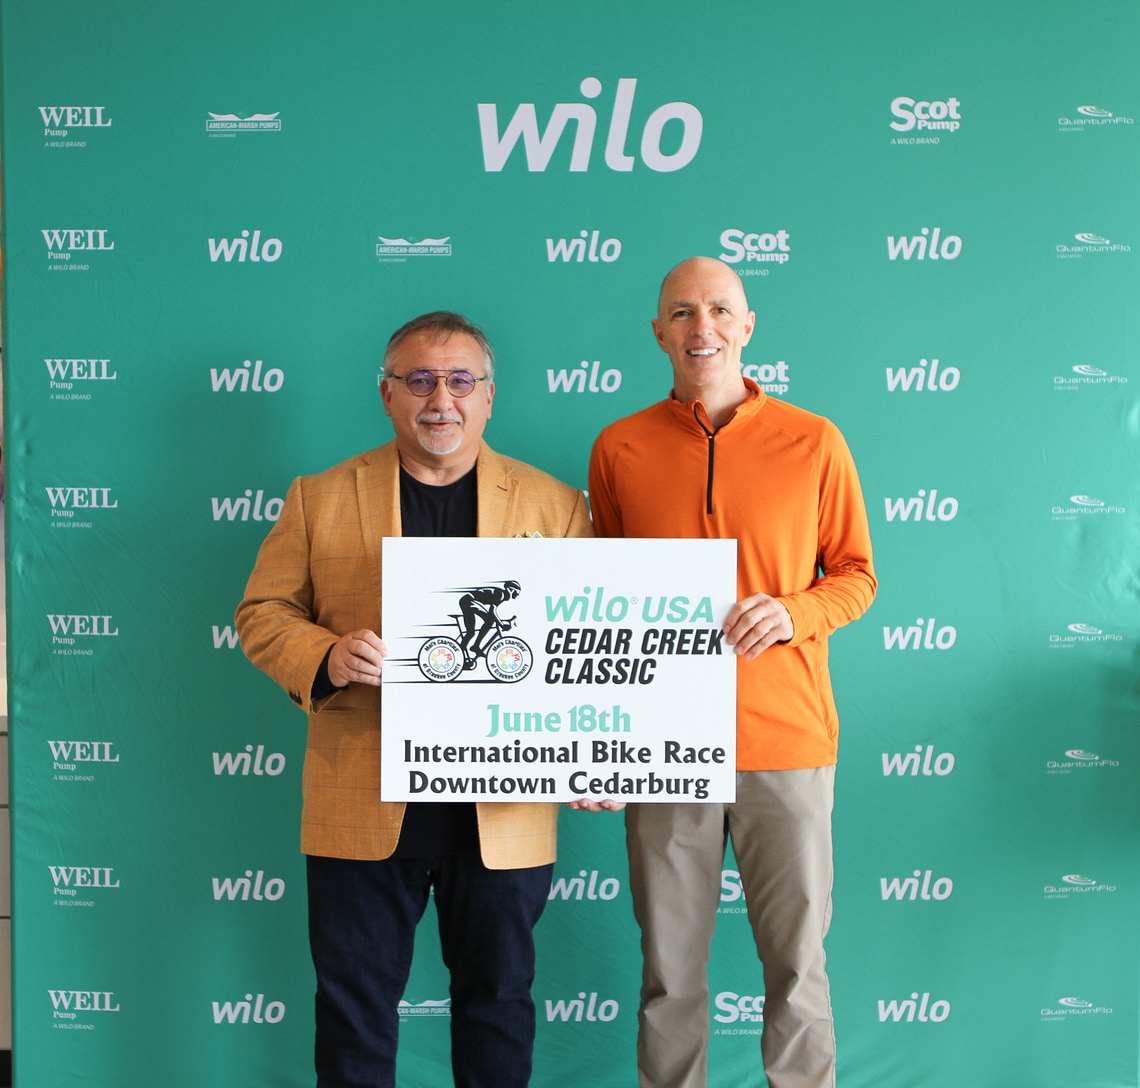 Wilo USA to Host Cedar Creek Classic Bike Race